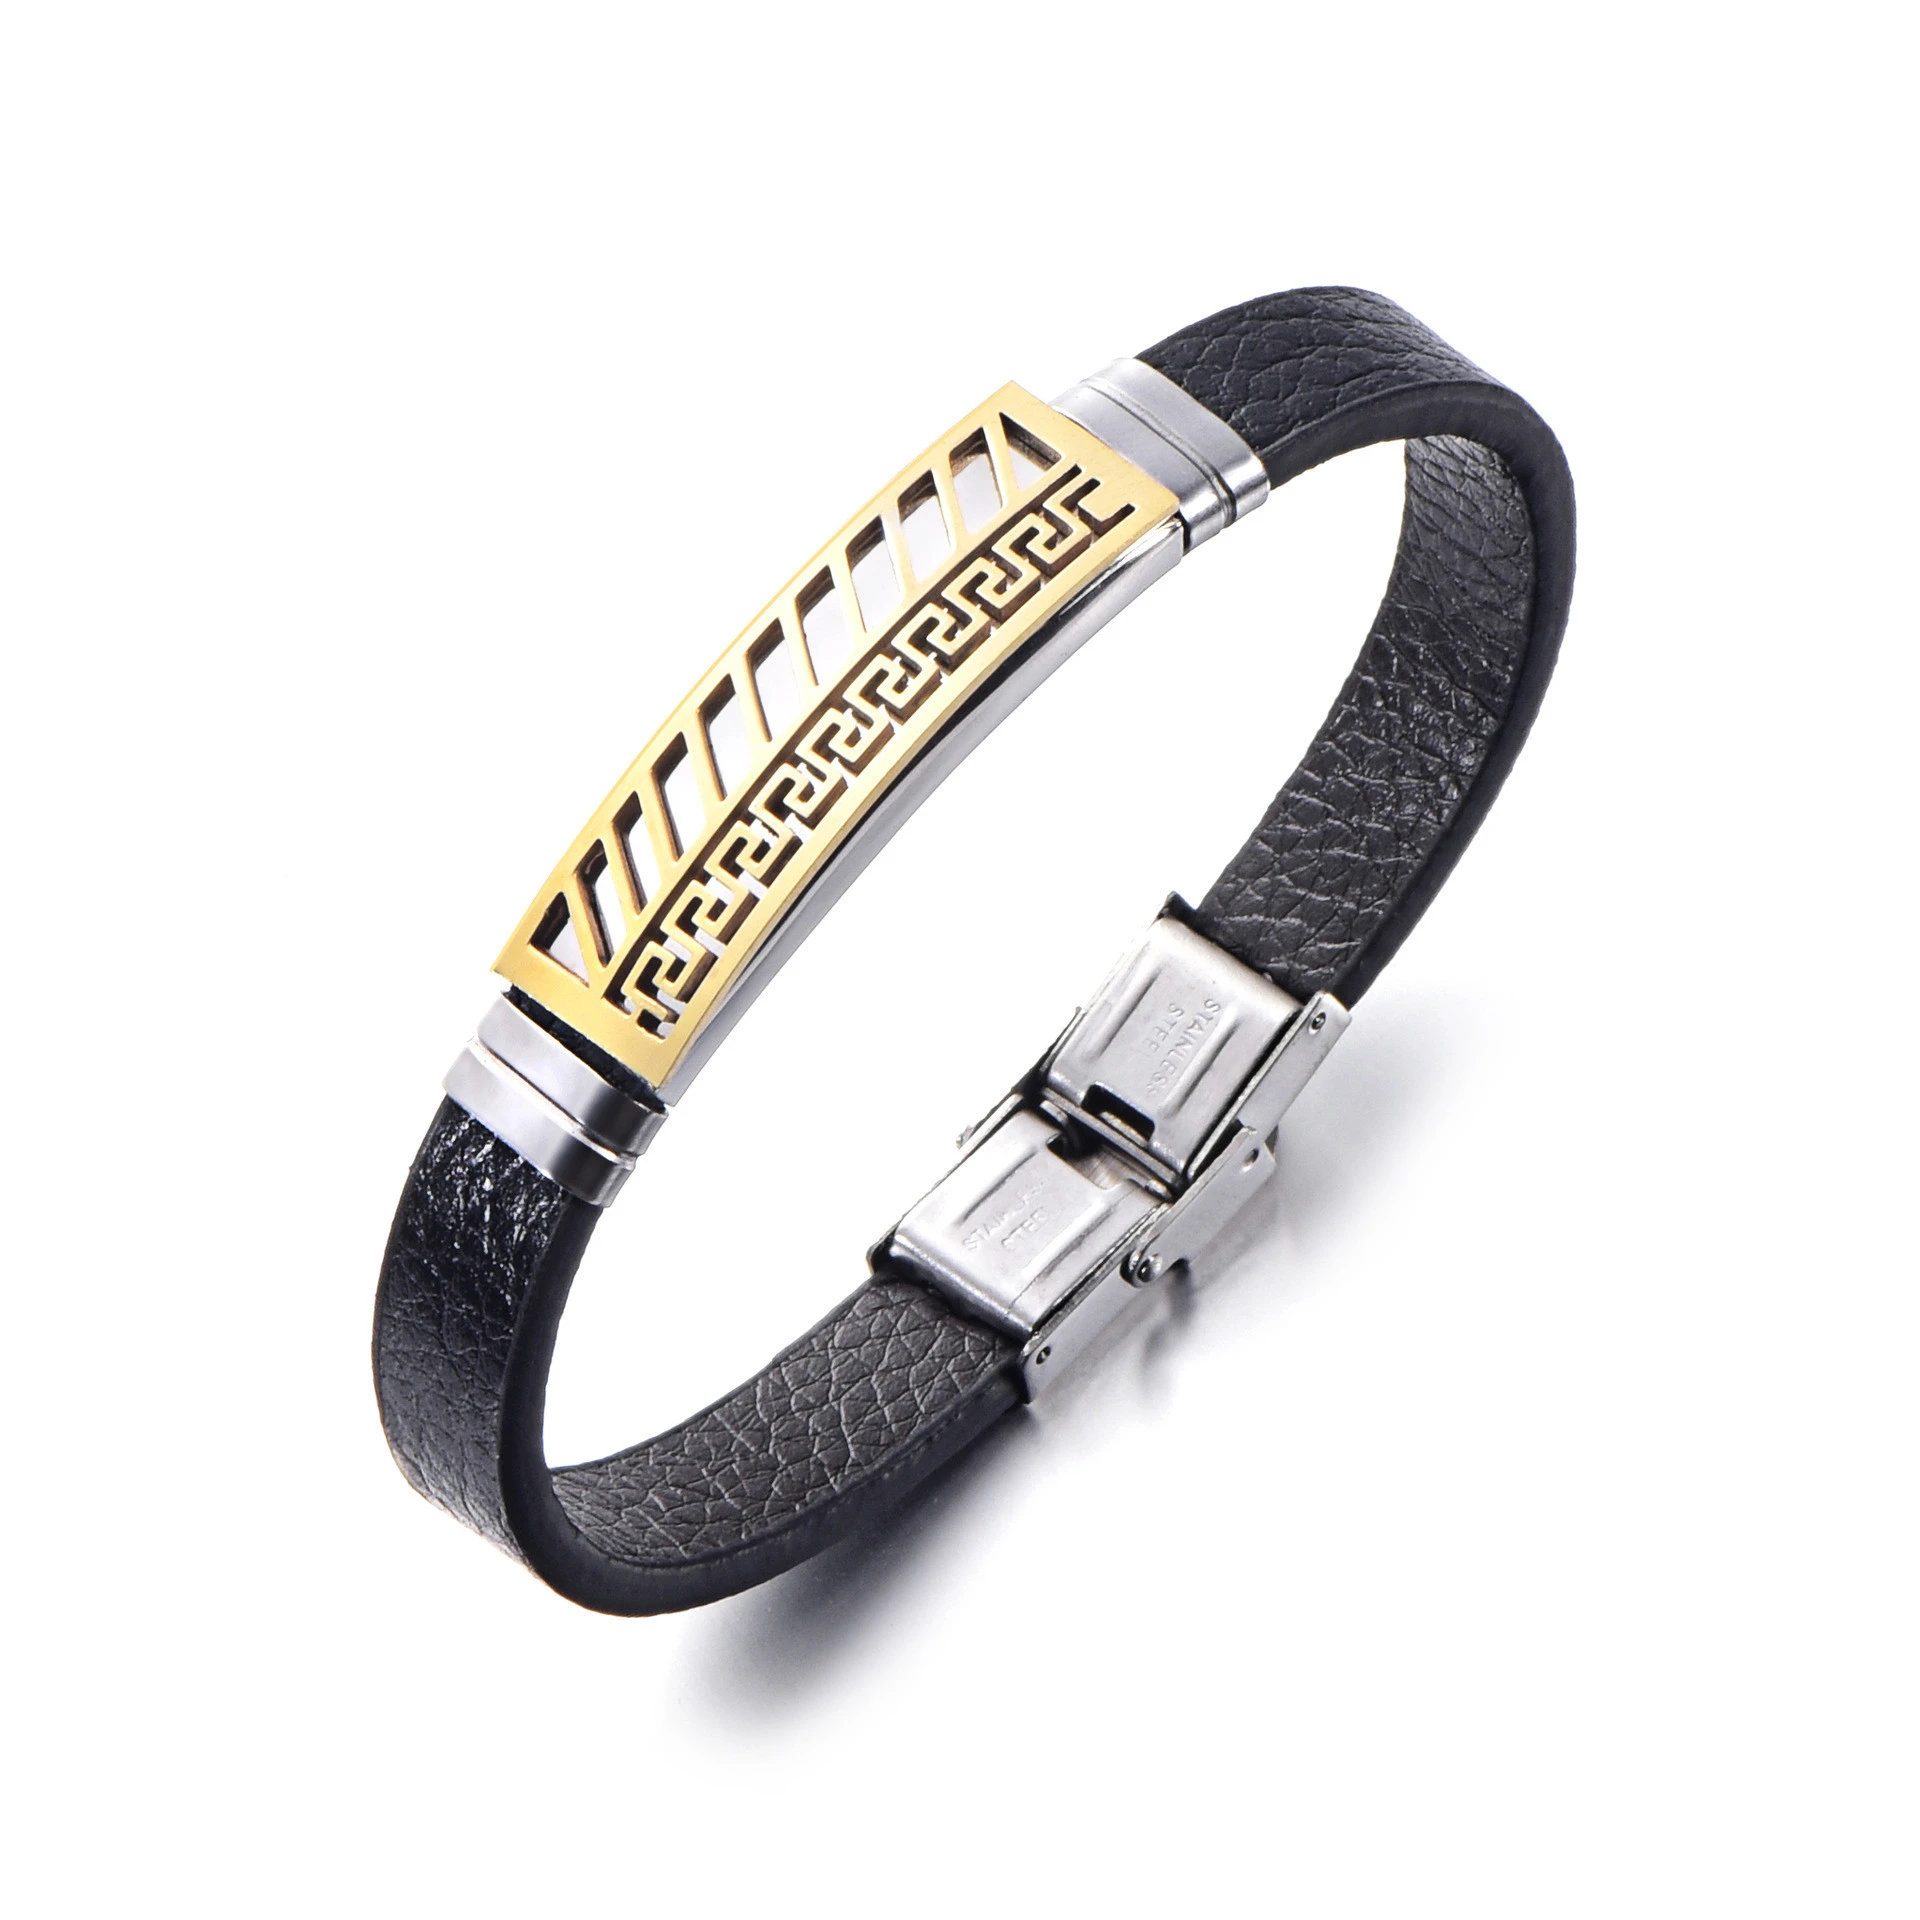 Hot sale promotional fashion jewelry unisex bangle stainless steel leather bracelets